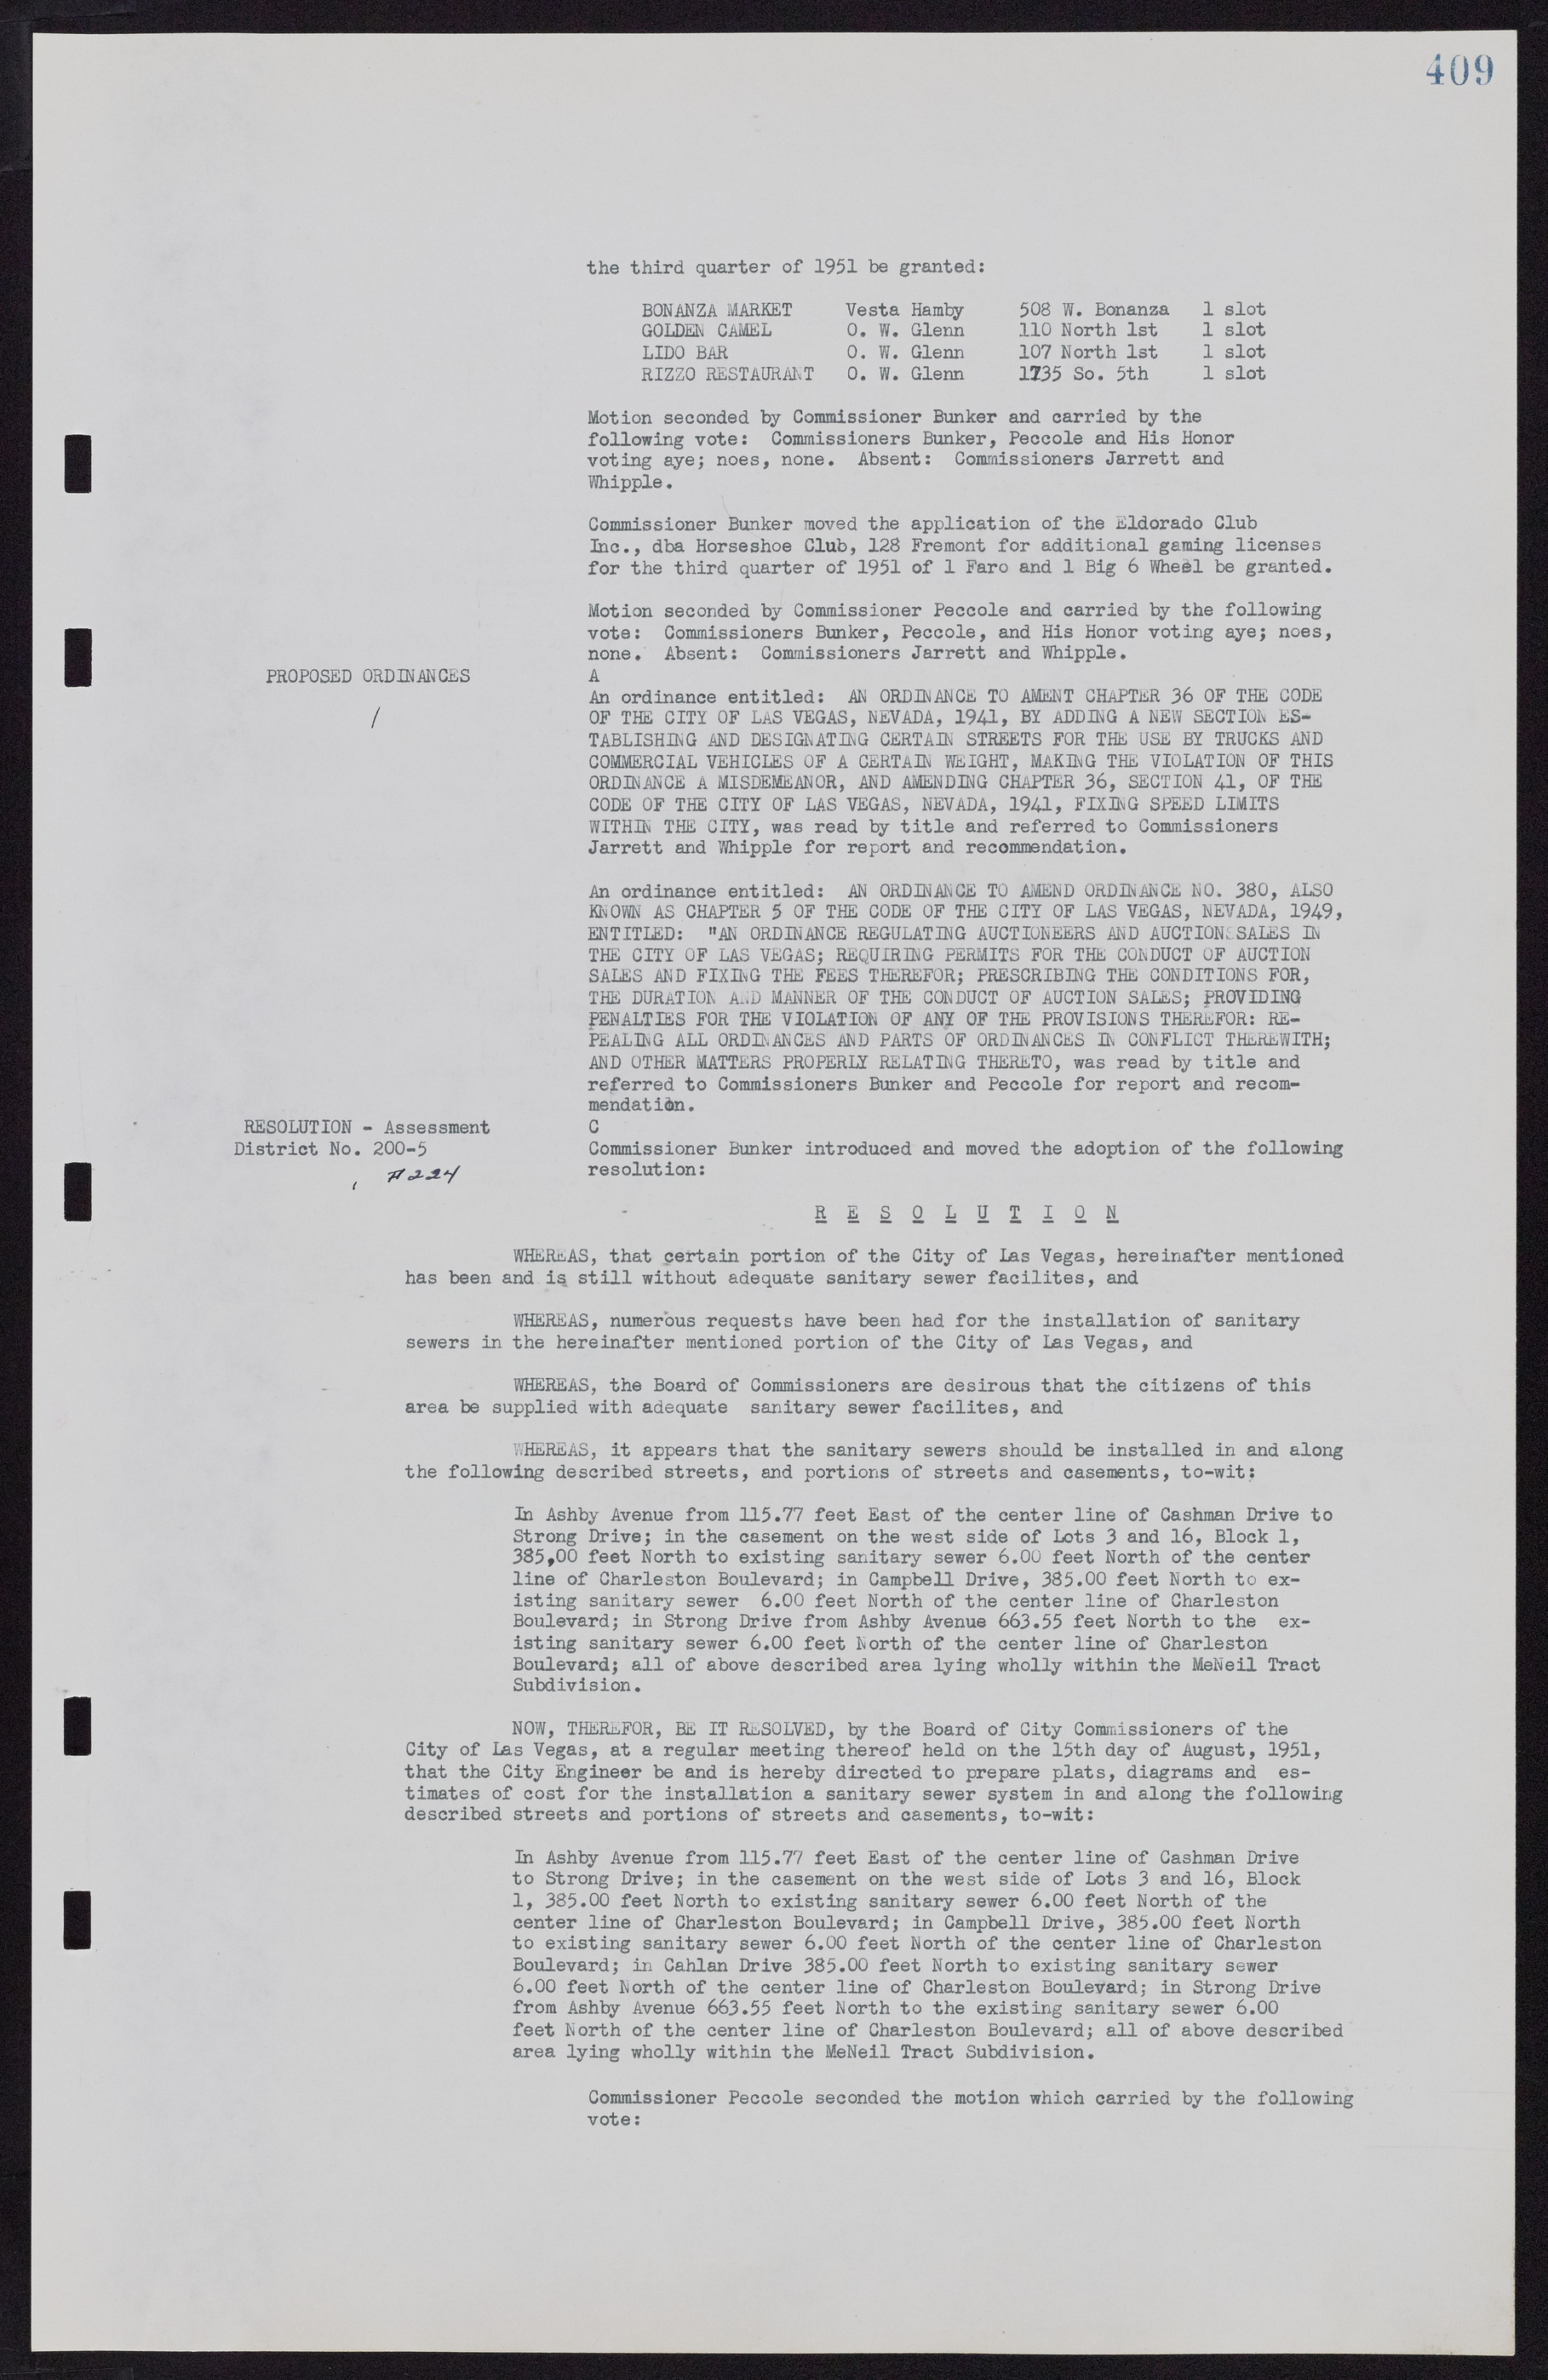 Las Vegas City Commission Minutes, November 7, 1949 to May 21, 1952, lvc000007-425